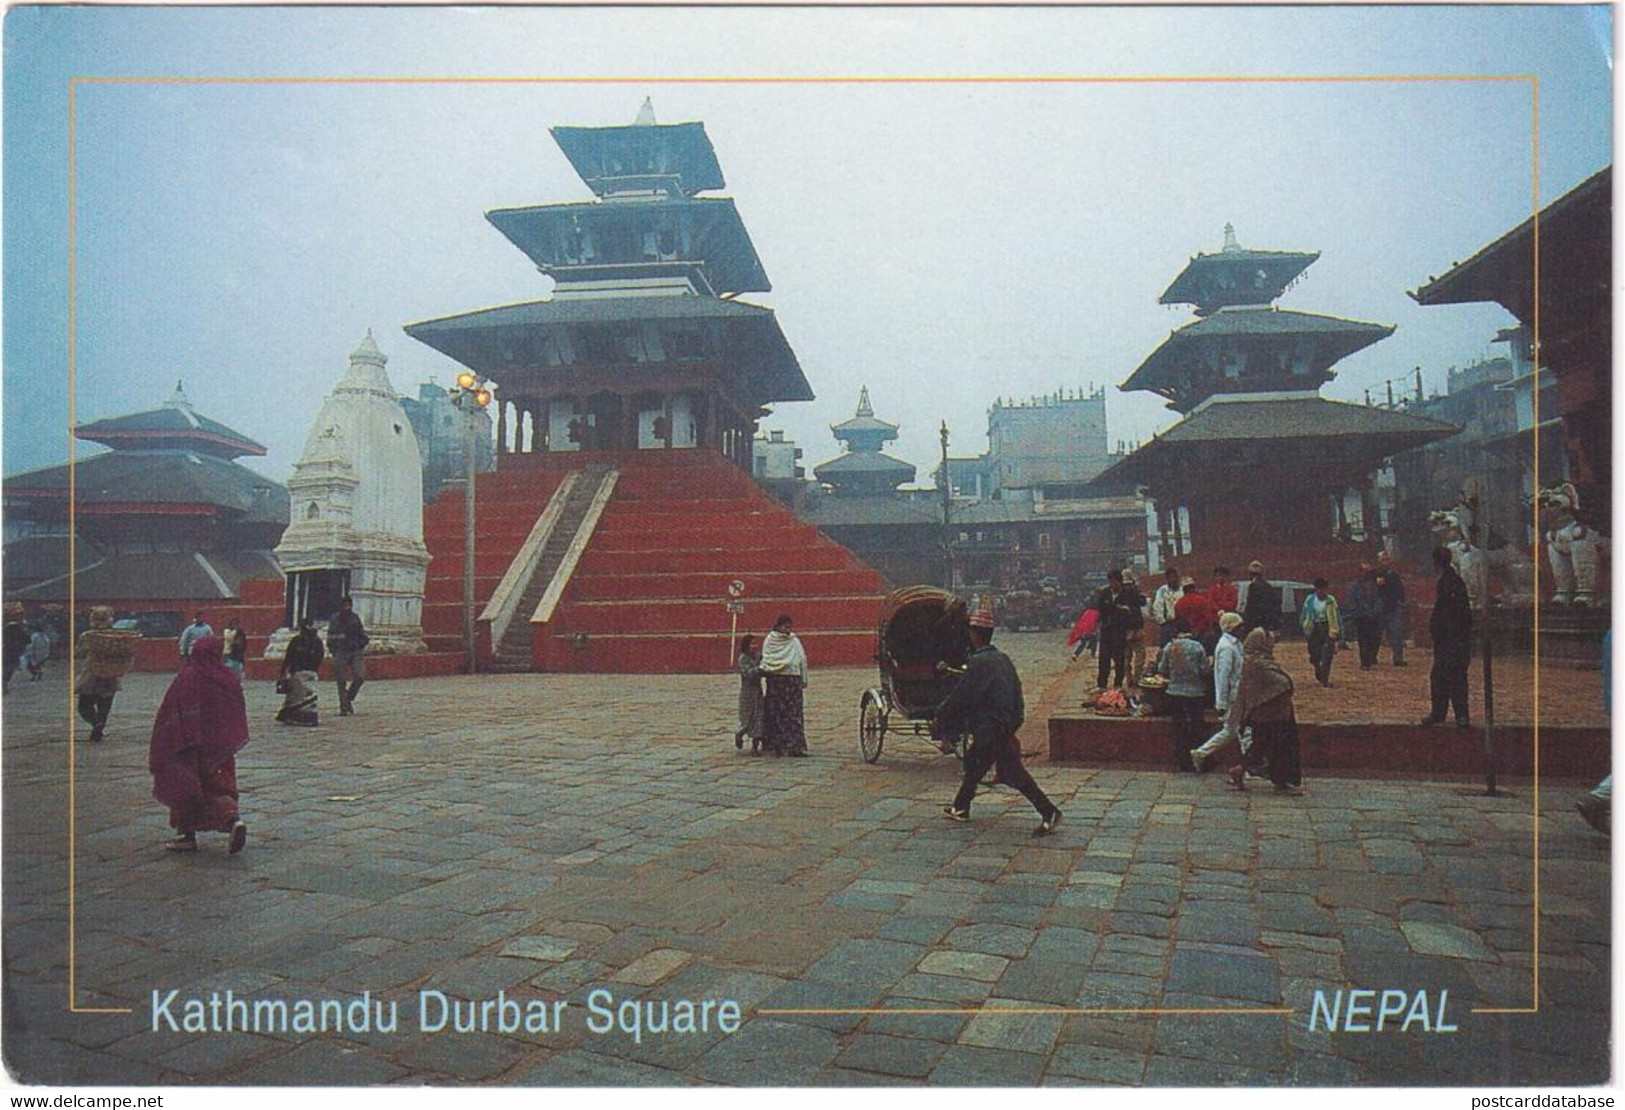 Kathmandu Durbar Square - Nepal - Mongolia